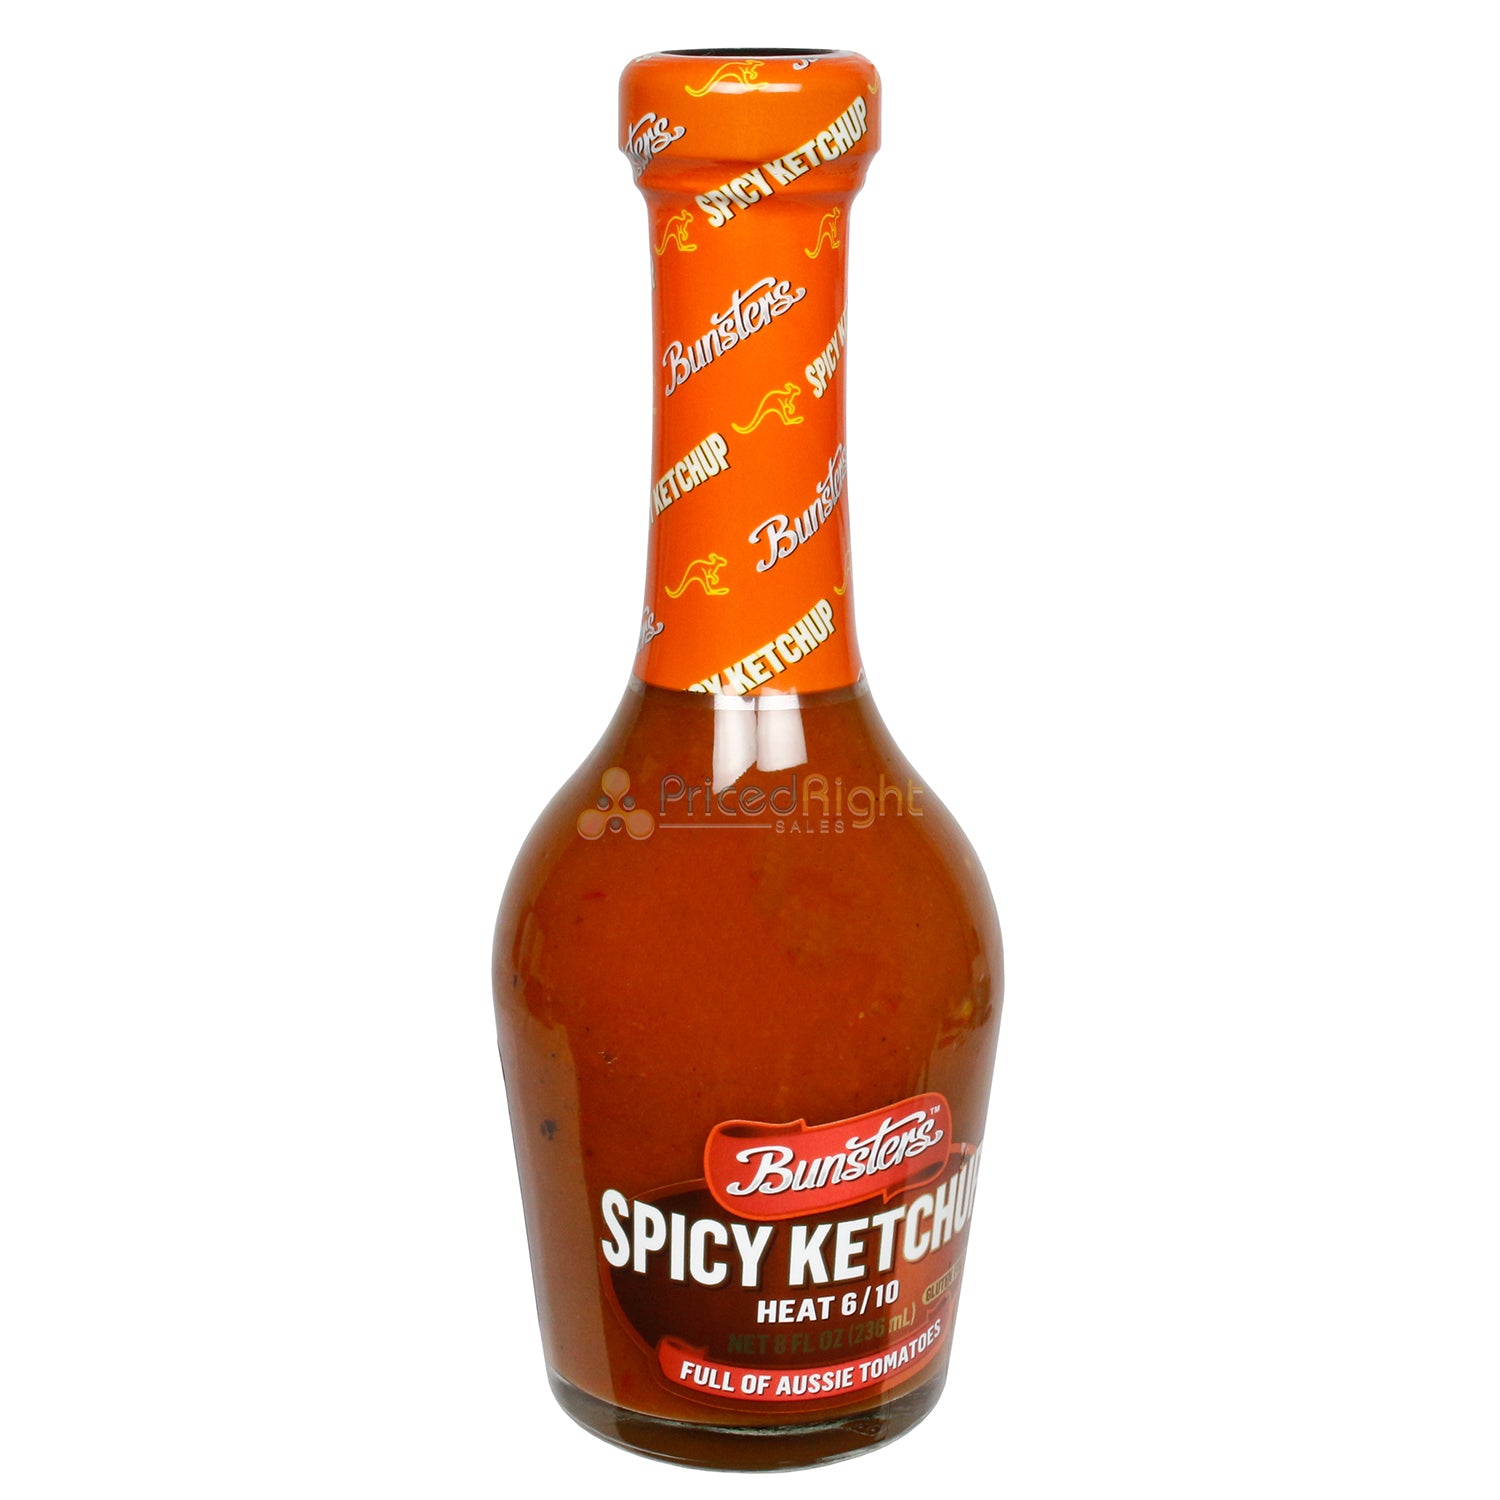 Bunsters Spicy Australian Ketchup Heat 6/10 Vegan Gluten Free Non Gmo 8 Fl Oz